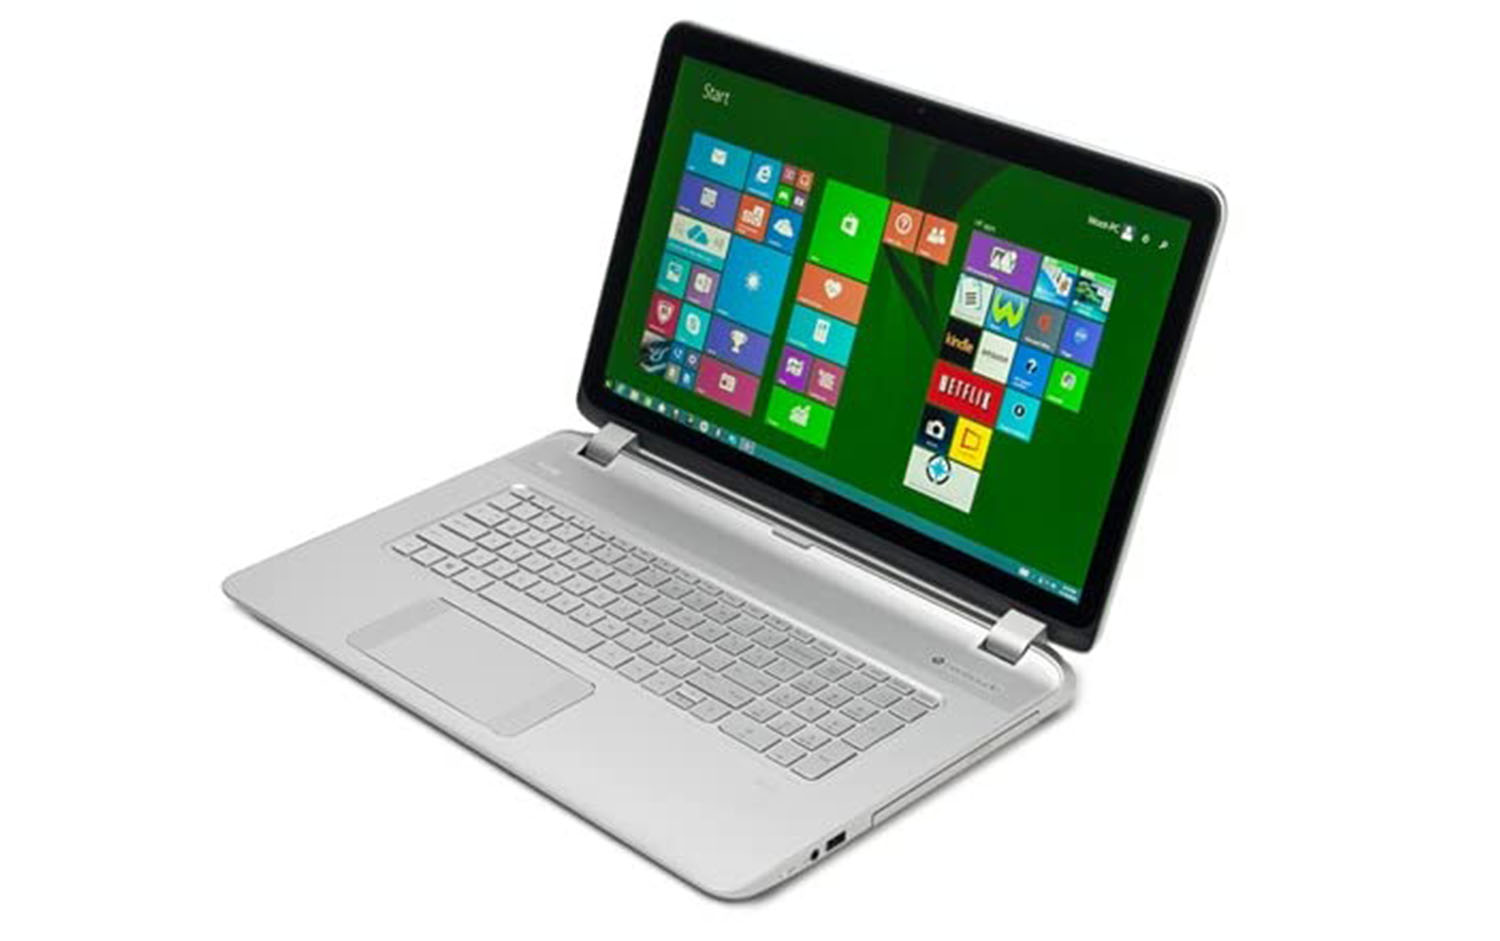 HP Envy M7 NoteBook Intel Core i7 5th Gen 12GB RAM 1TB HDD Touchscreen Windows 10 Home